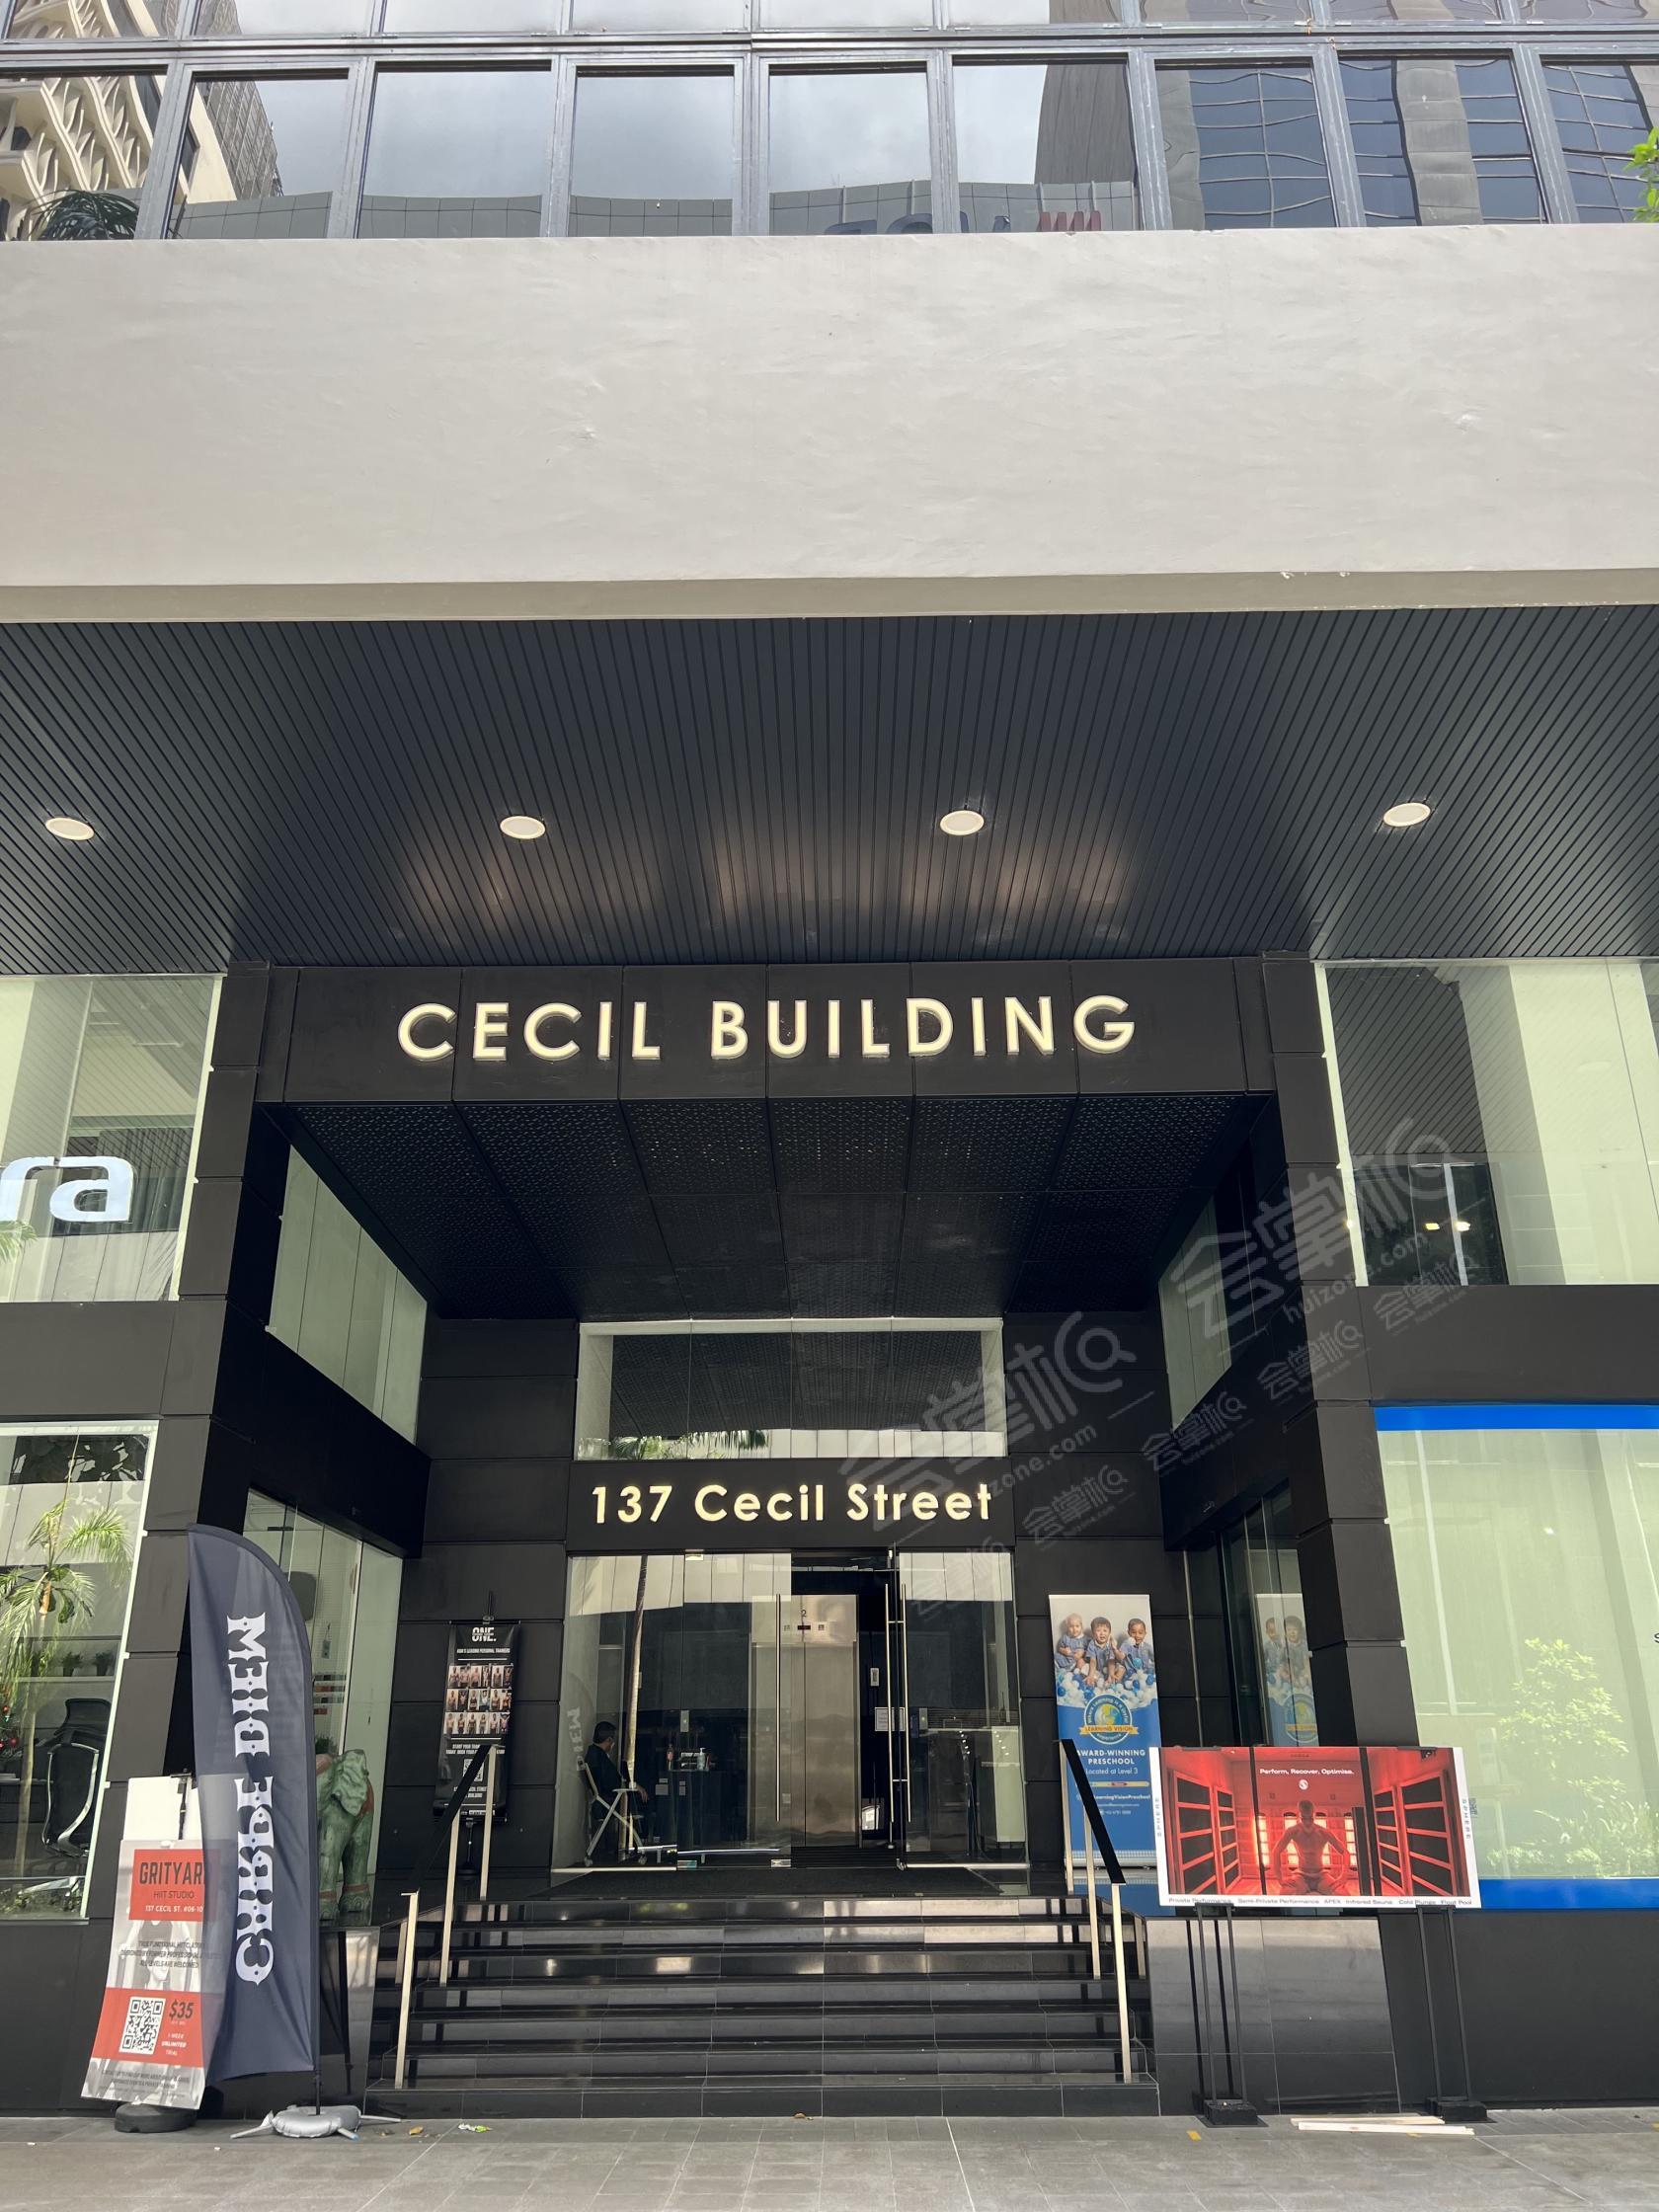 Caliente Cecil Building